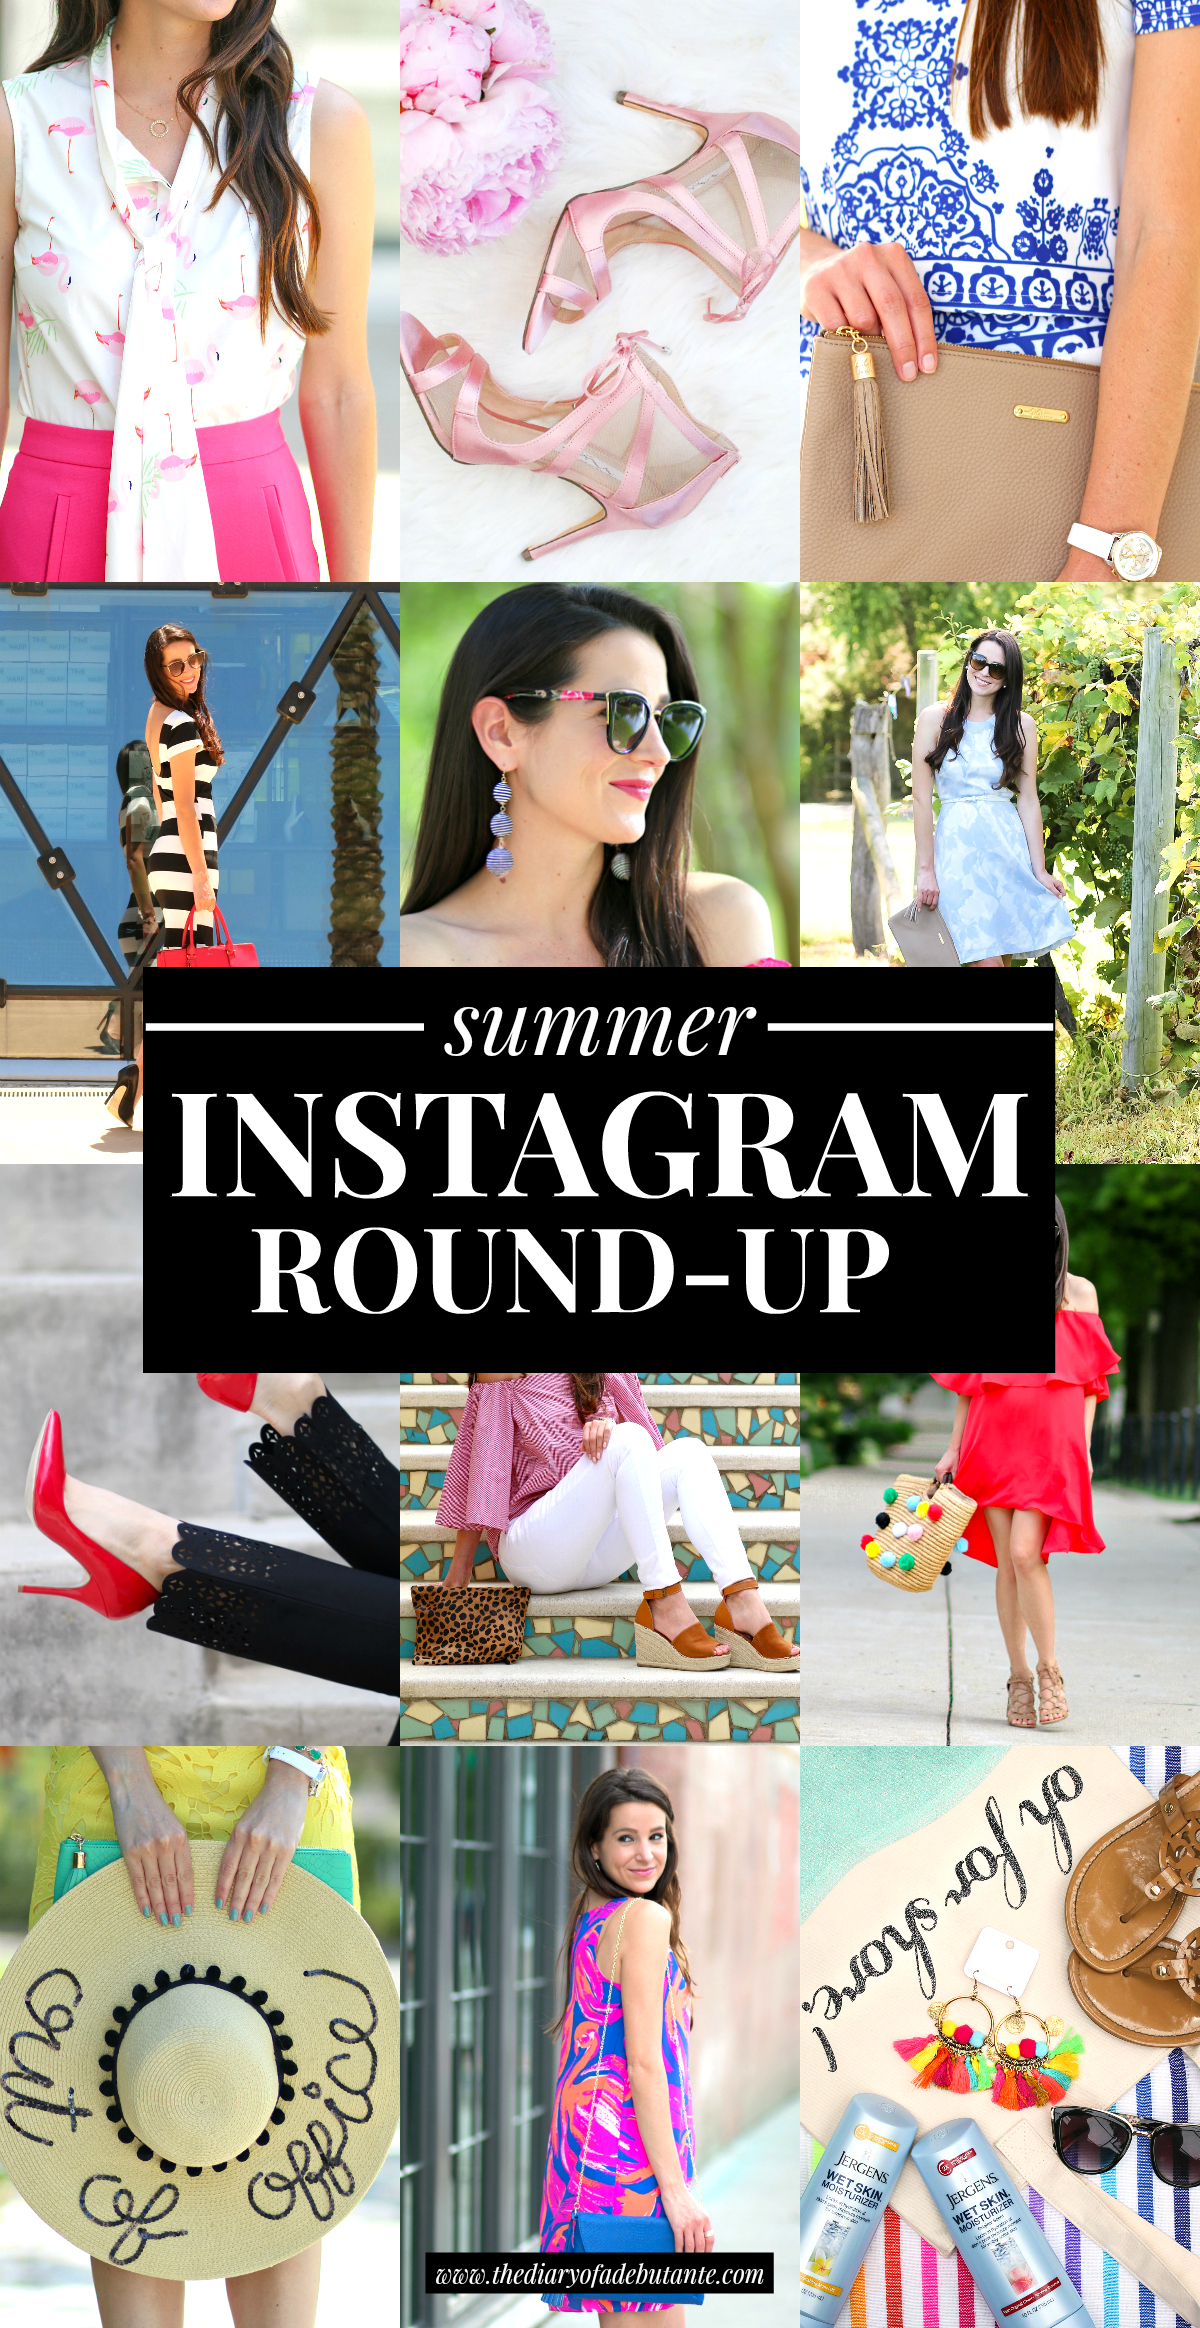 Summer Instagram ideas from @StephanieZiajka